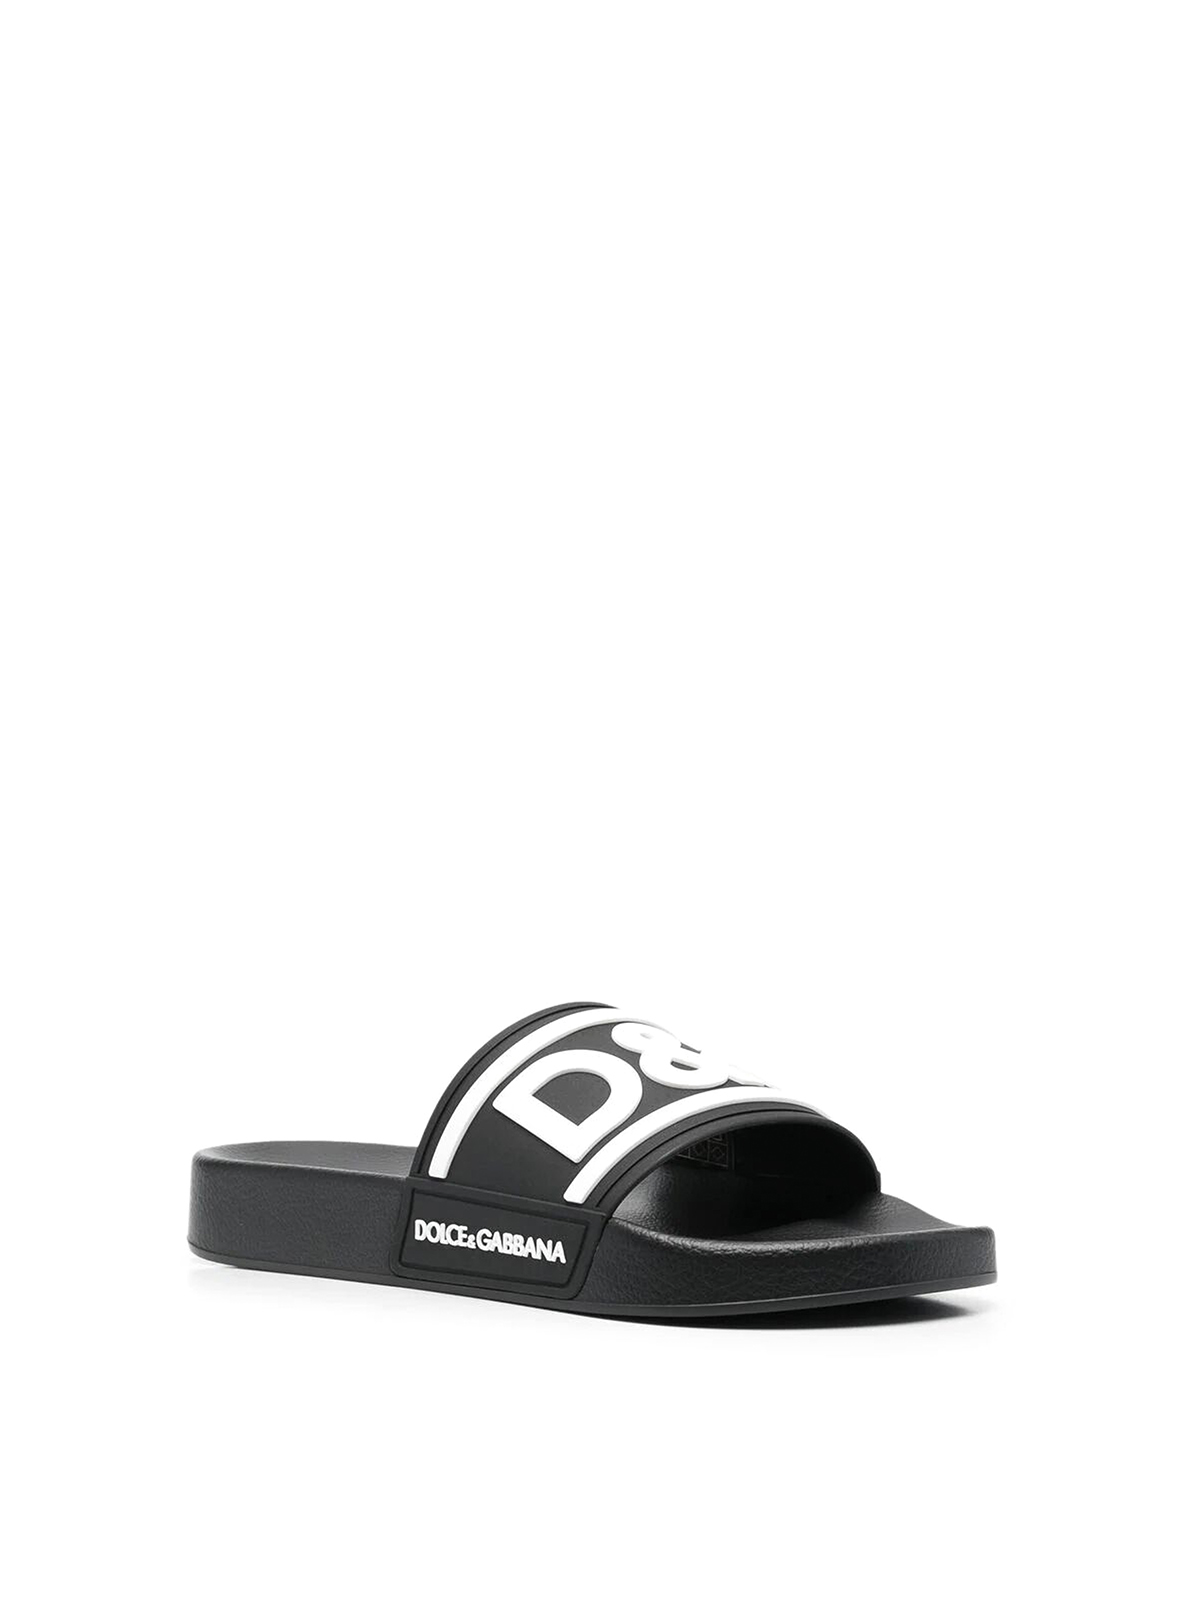 Schandalig Silicium Politie Flip flops Dolce & Gabbana - Rubber slippers with logo - CW2072AQ85889690